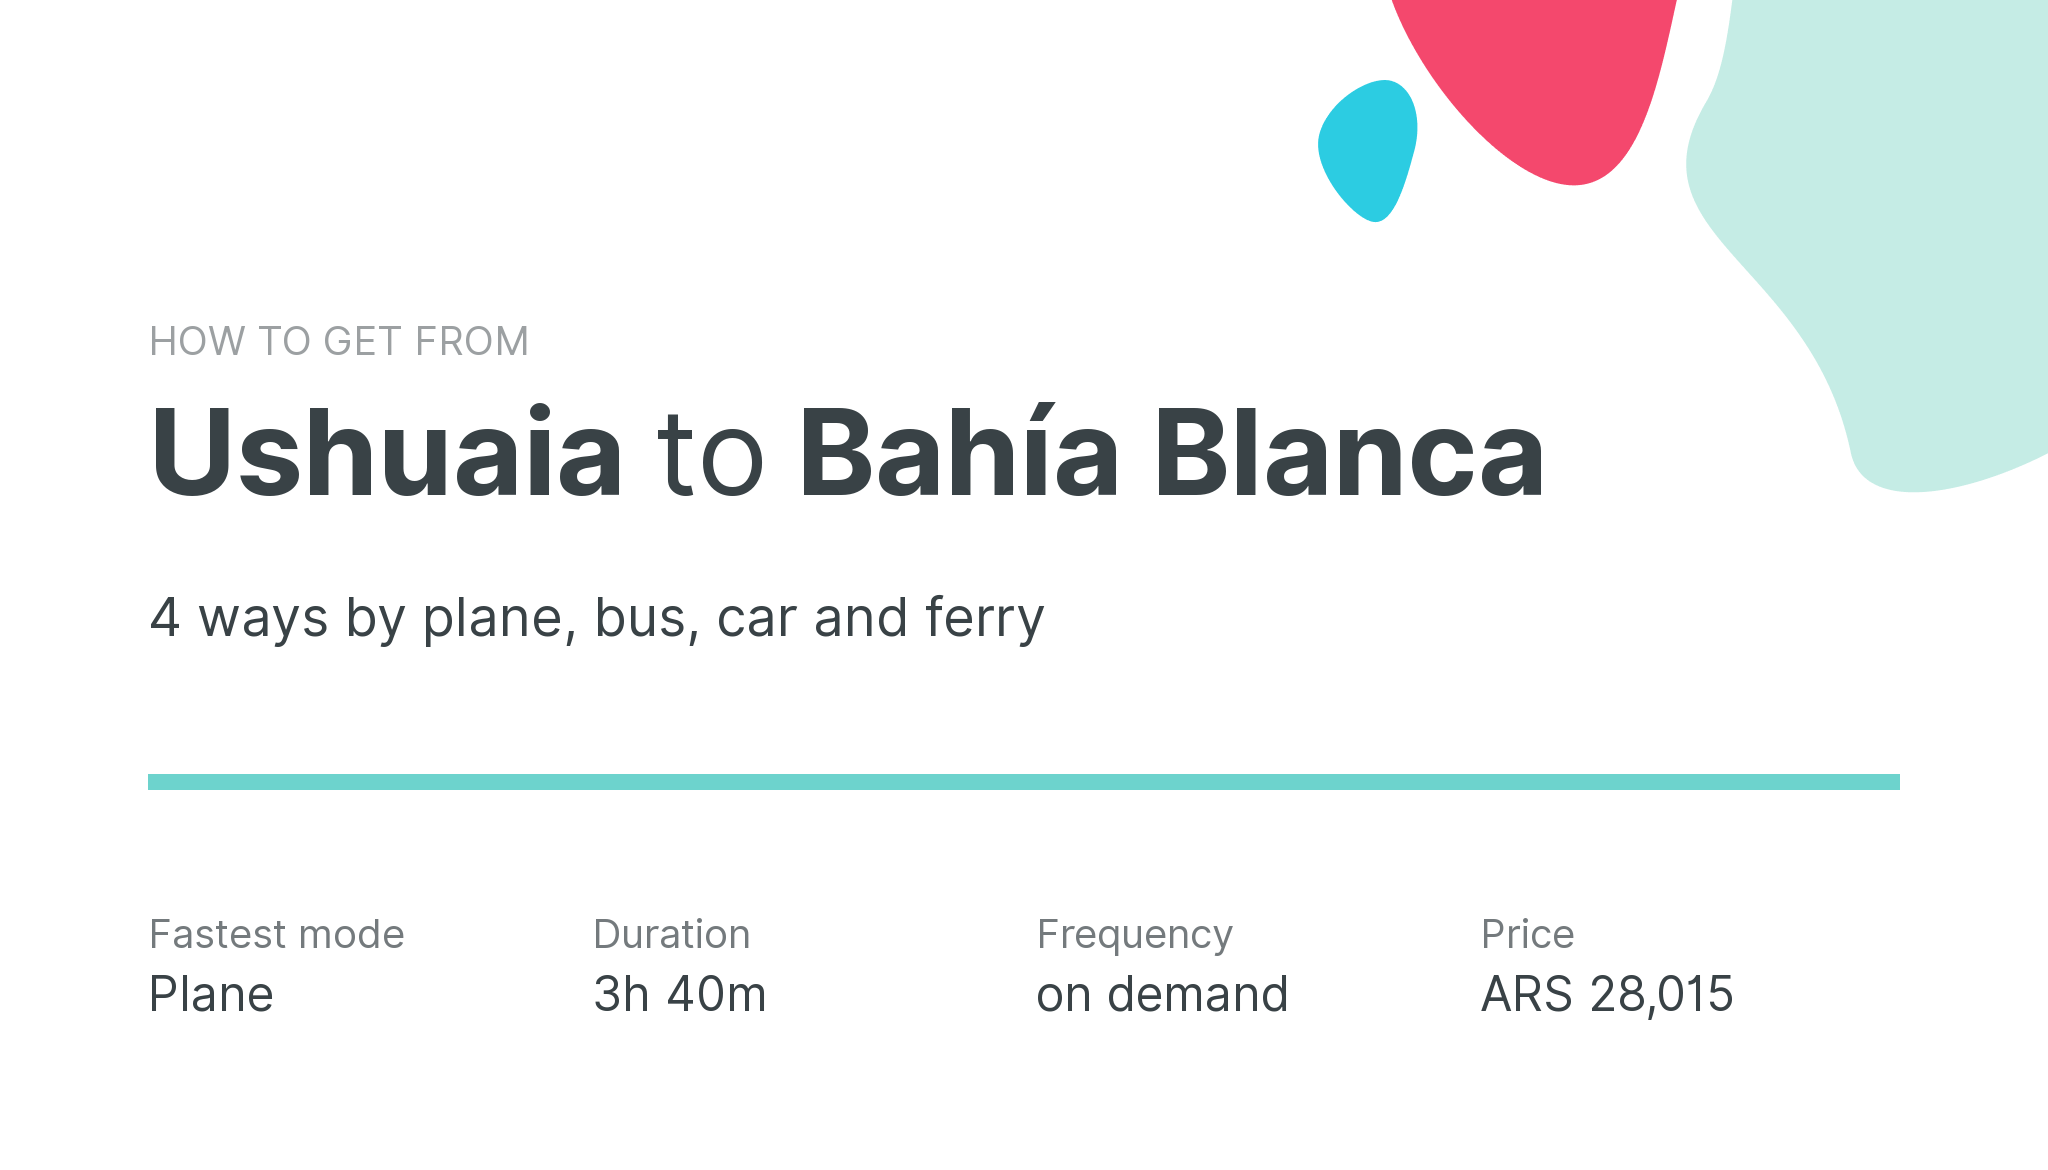 How do I get from Ushuaia to Bahía Blanca